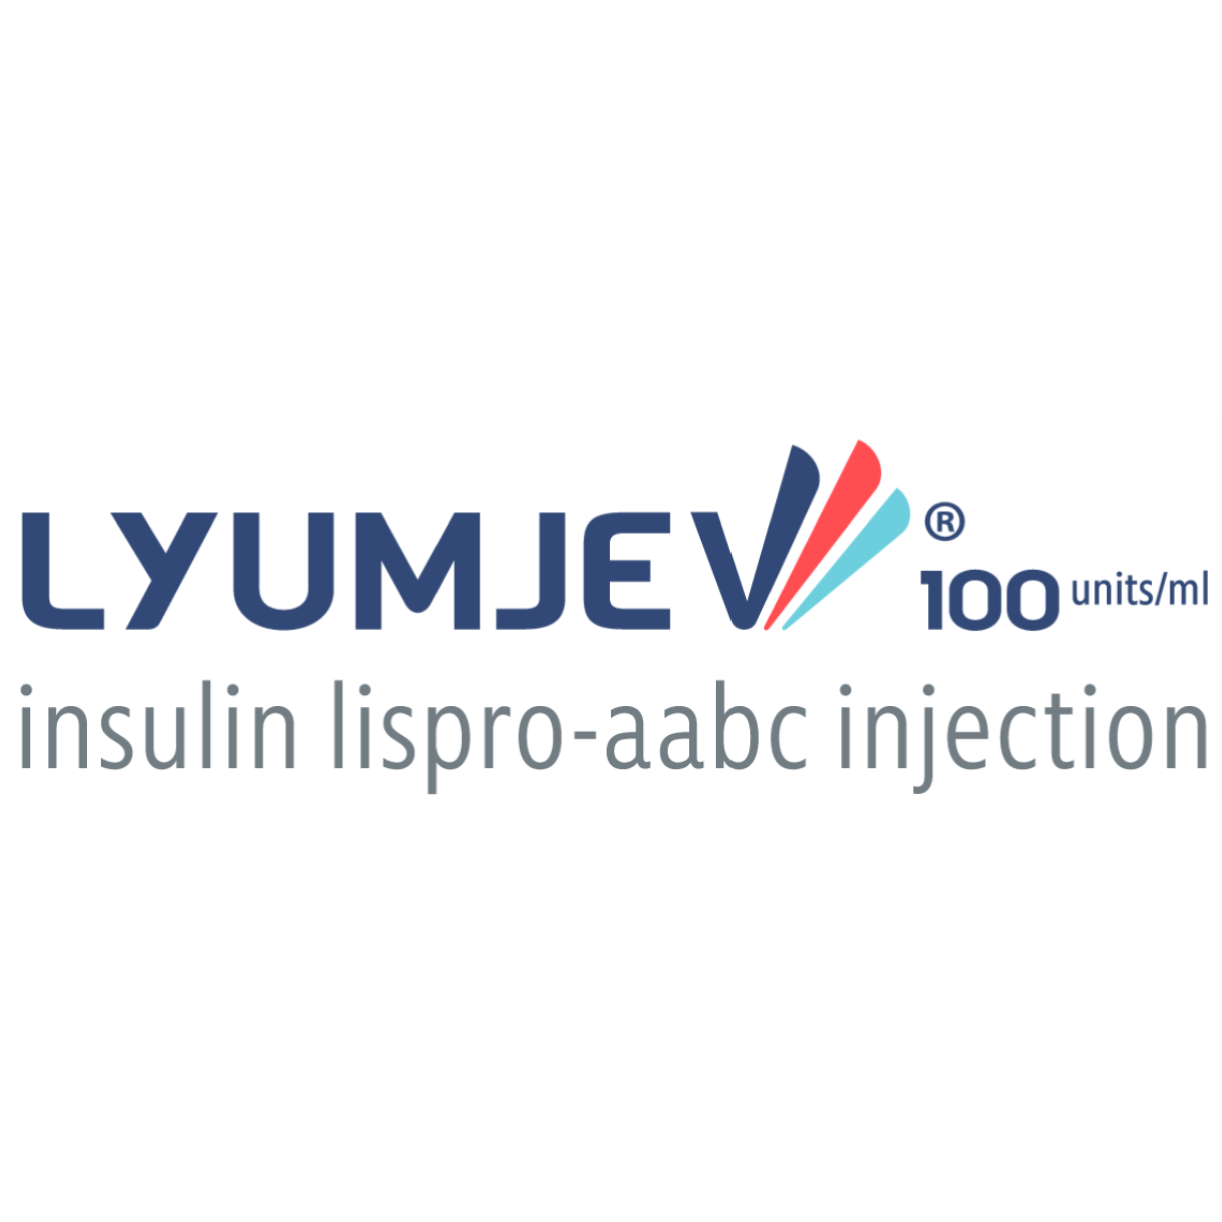 Lyumjev insulin lispro-aabc injection 100 units/mL